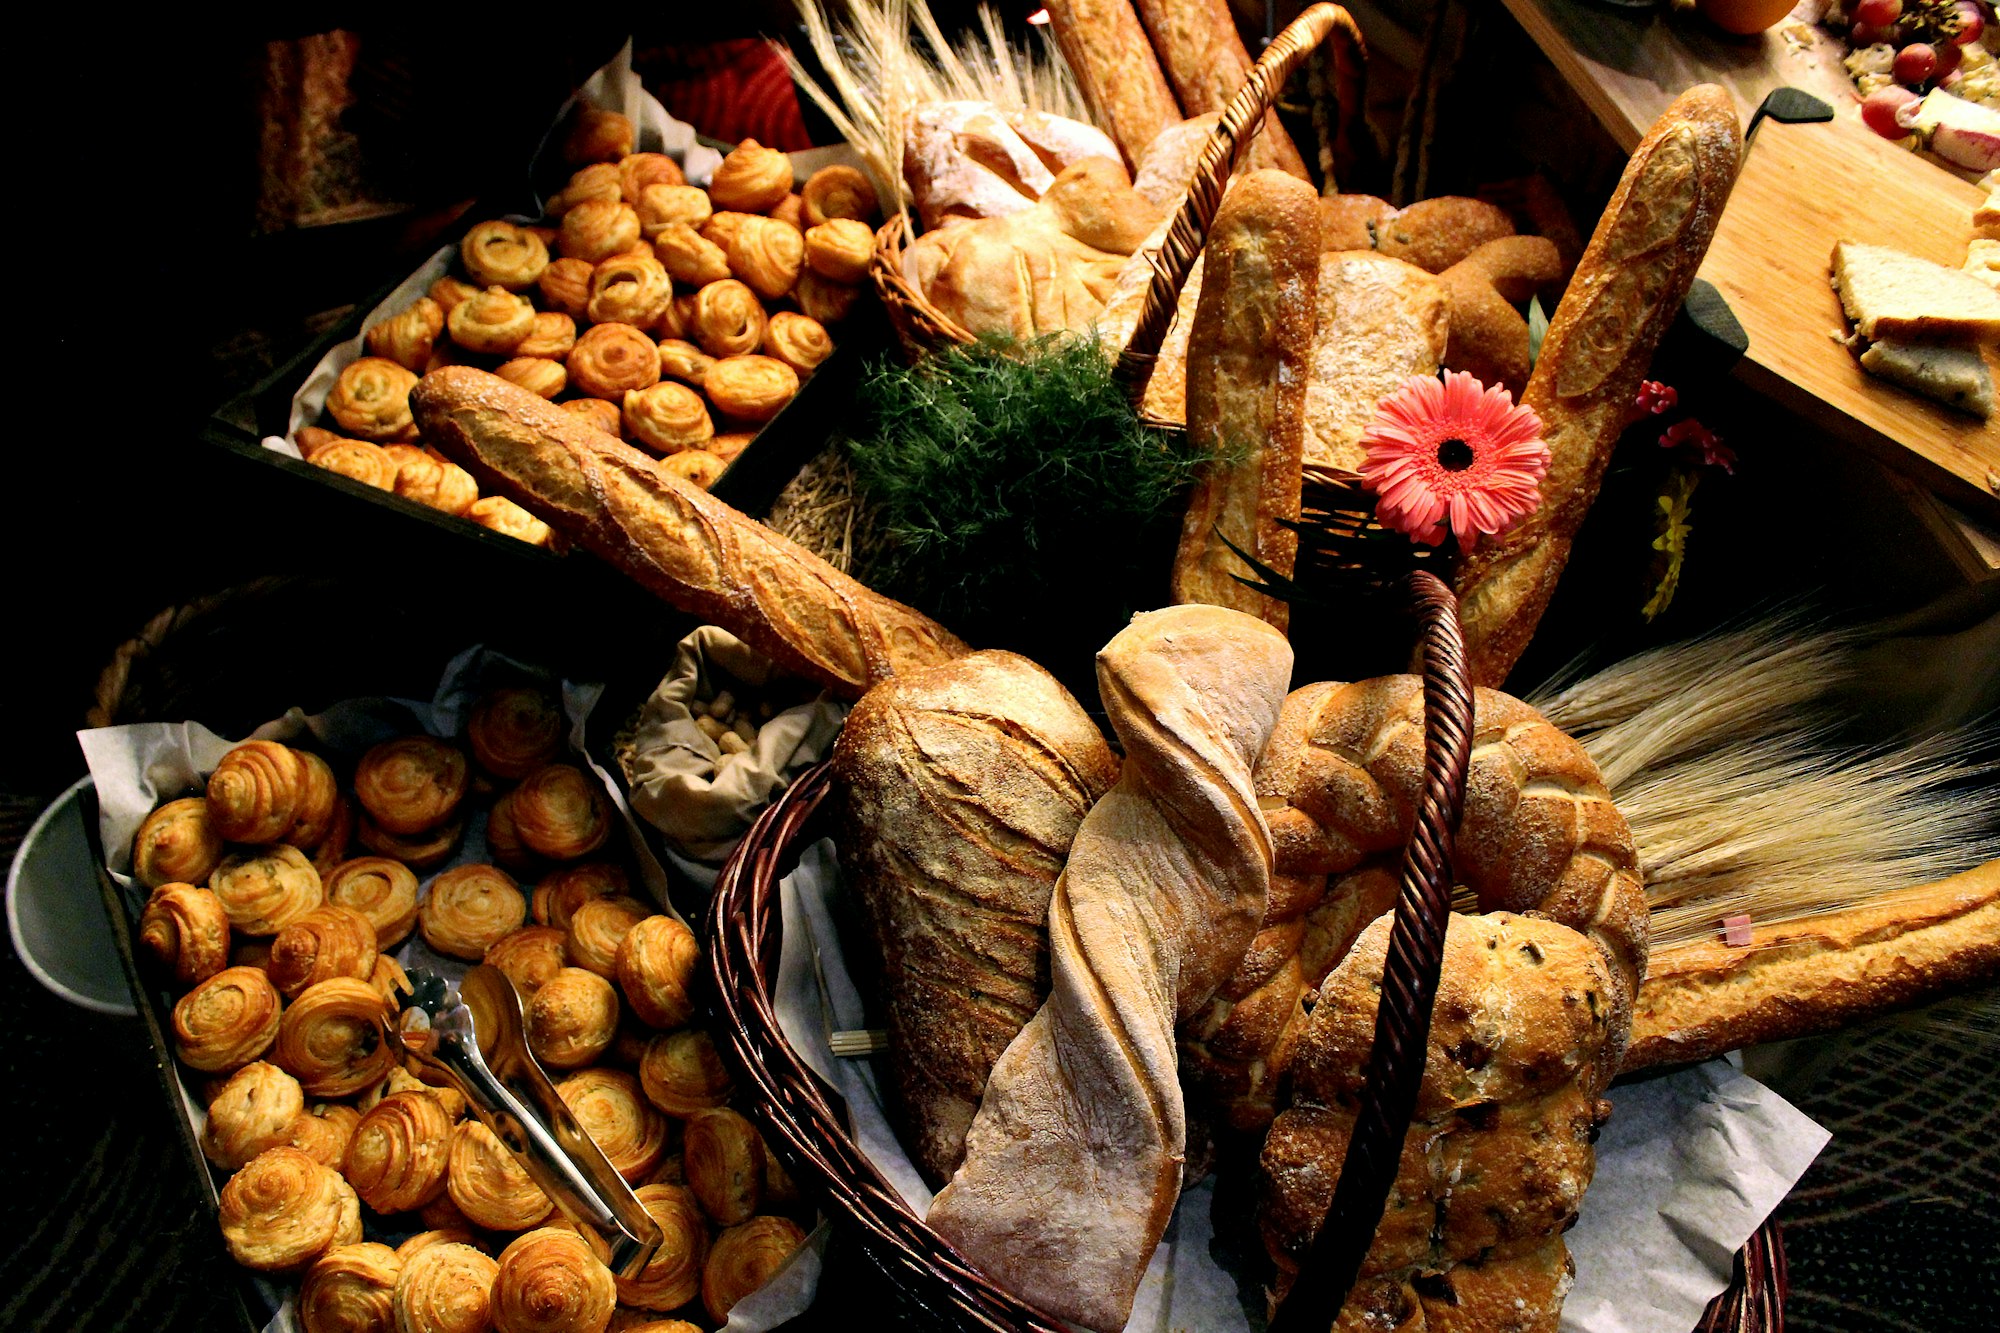 Los Cabos stands out as a gastronomic destination